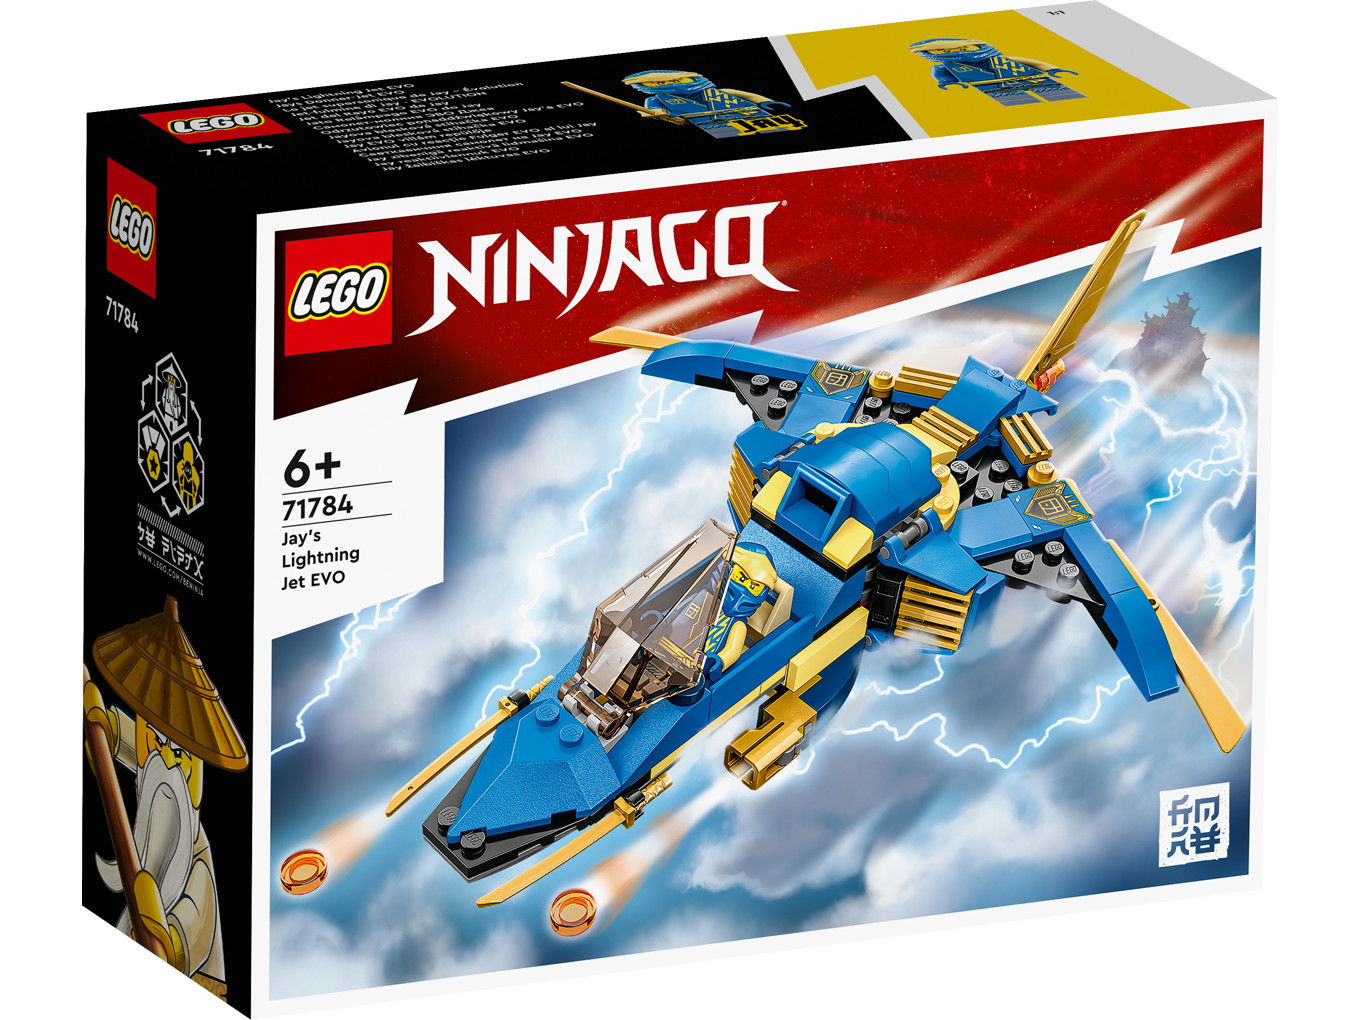 begroting preambule Dertig LEGO Ninjago 71784 Jay's Bliksemstraaljager EVO - Jan's Steen